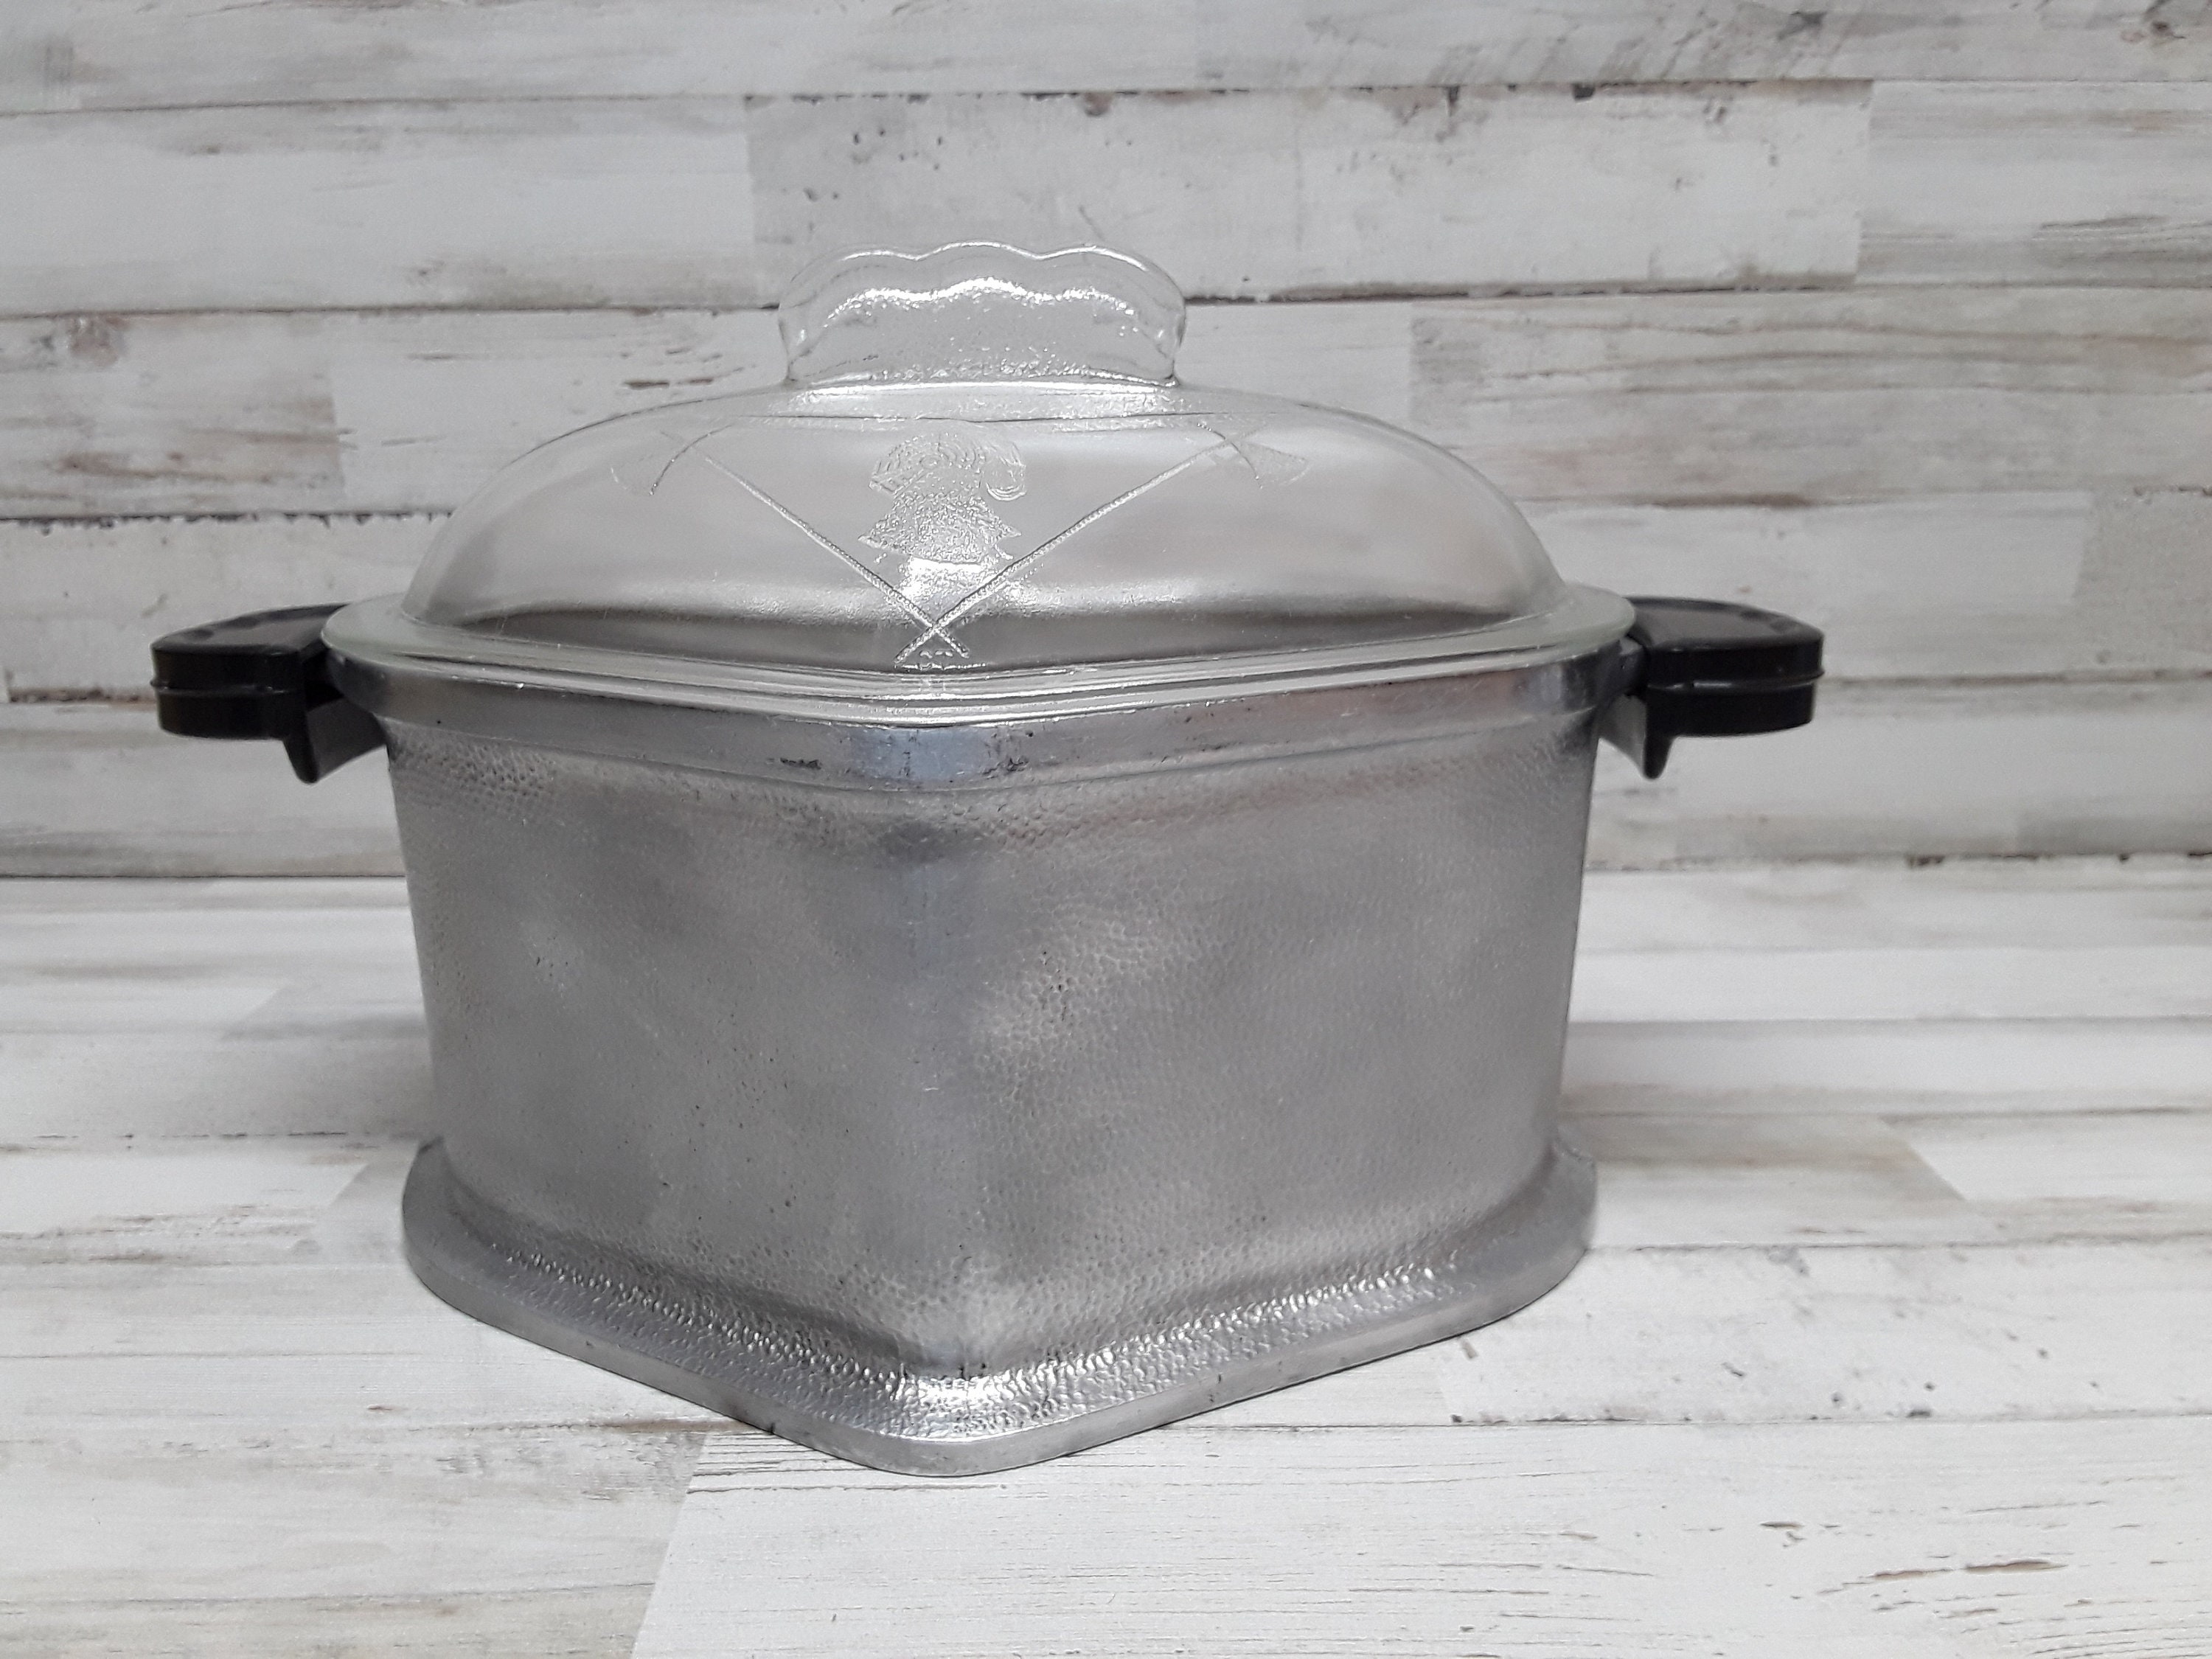 Set of 5 Various Mid Century Pots, Saucepans, Cooking Ware Regal Supreme  Stainless Ware 1927 Atomic Wear-ever Aluminum Vintage Pans 